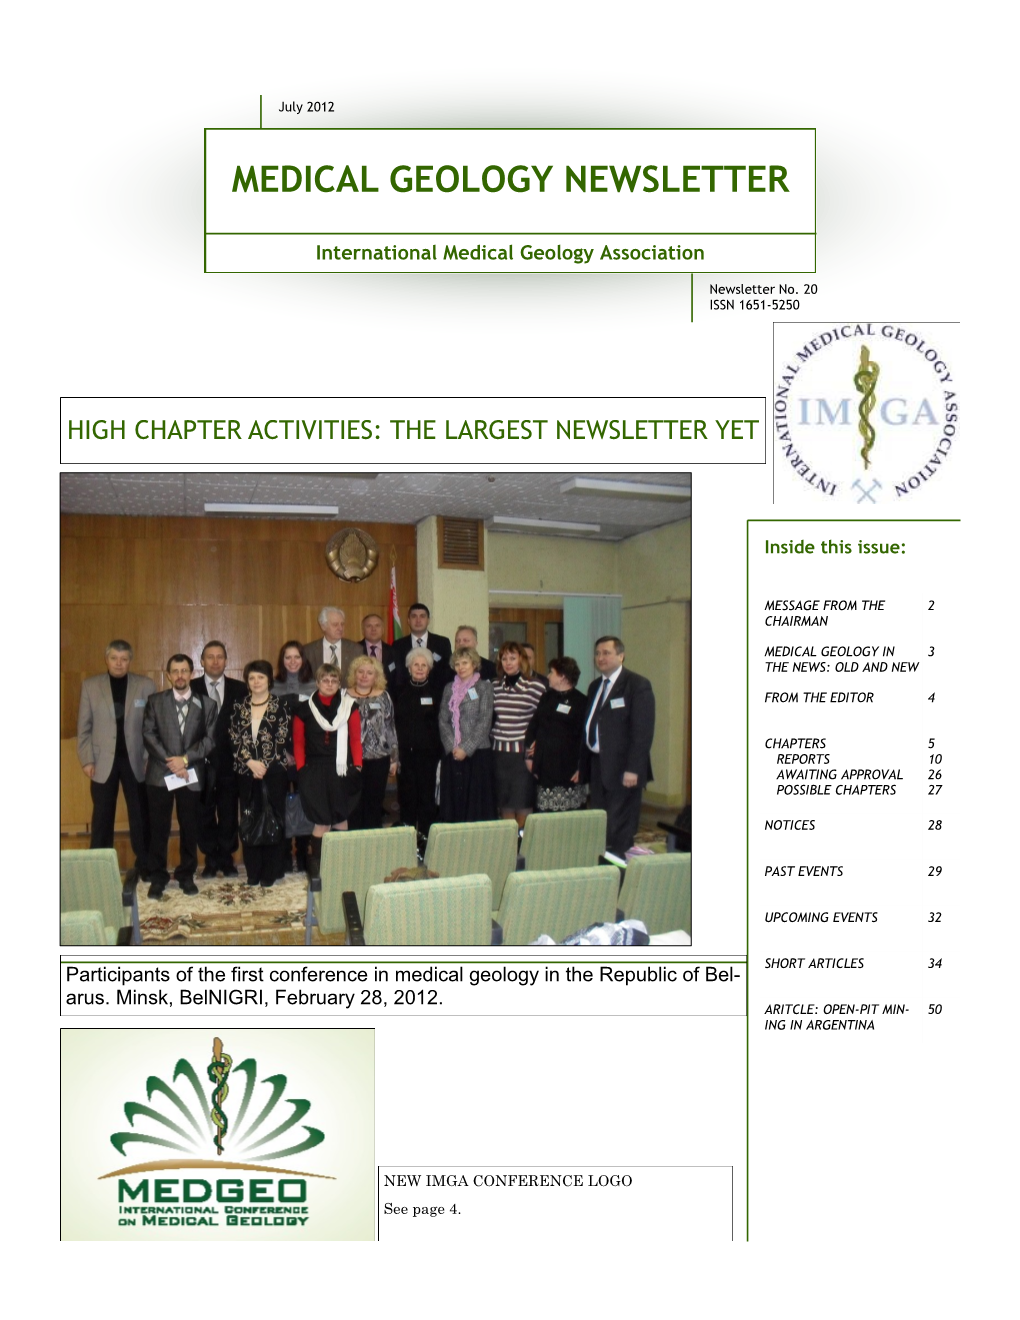 Medical Geology Newsletter